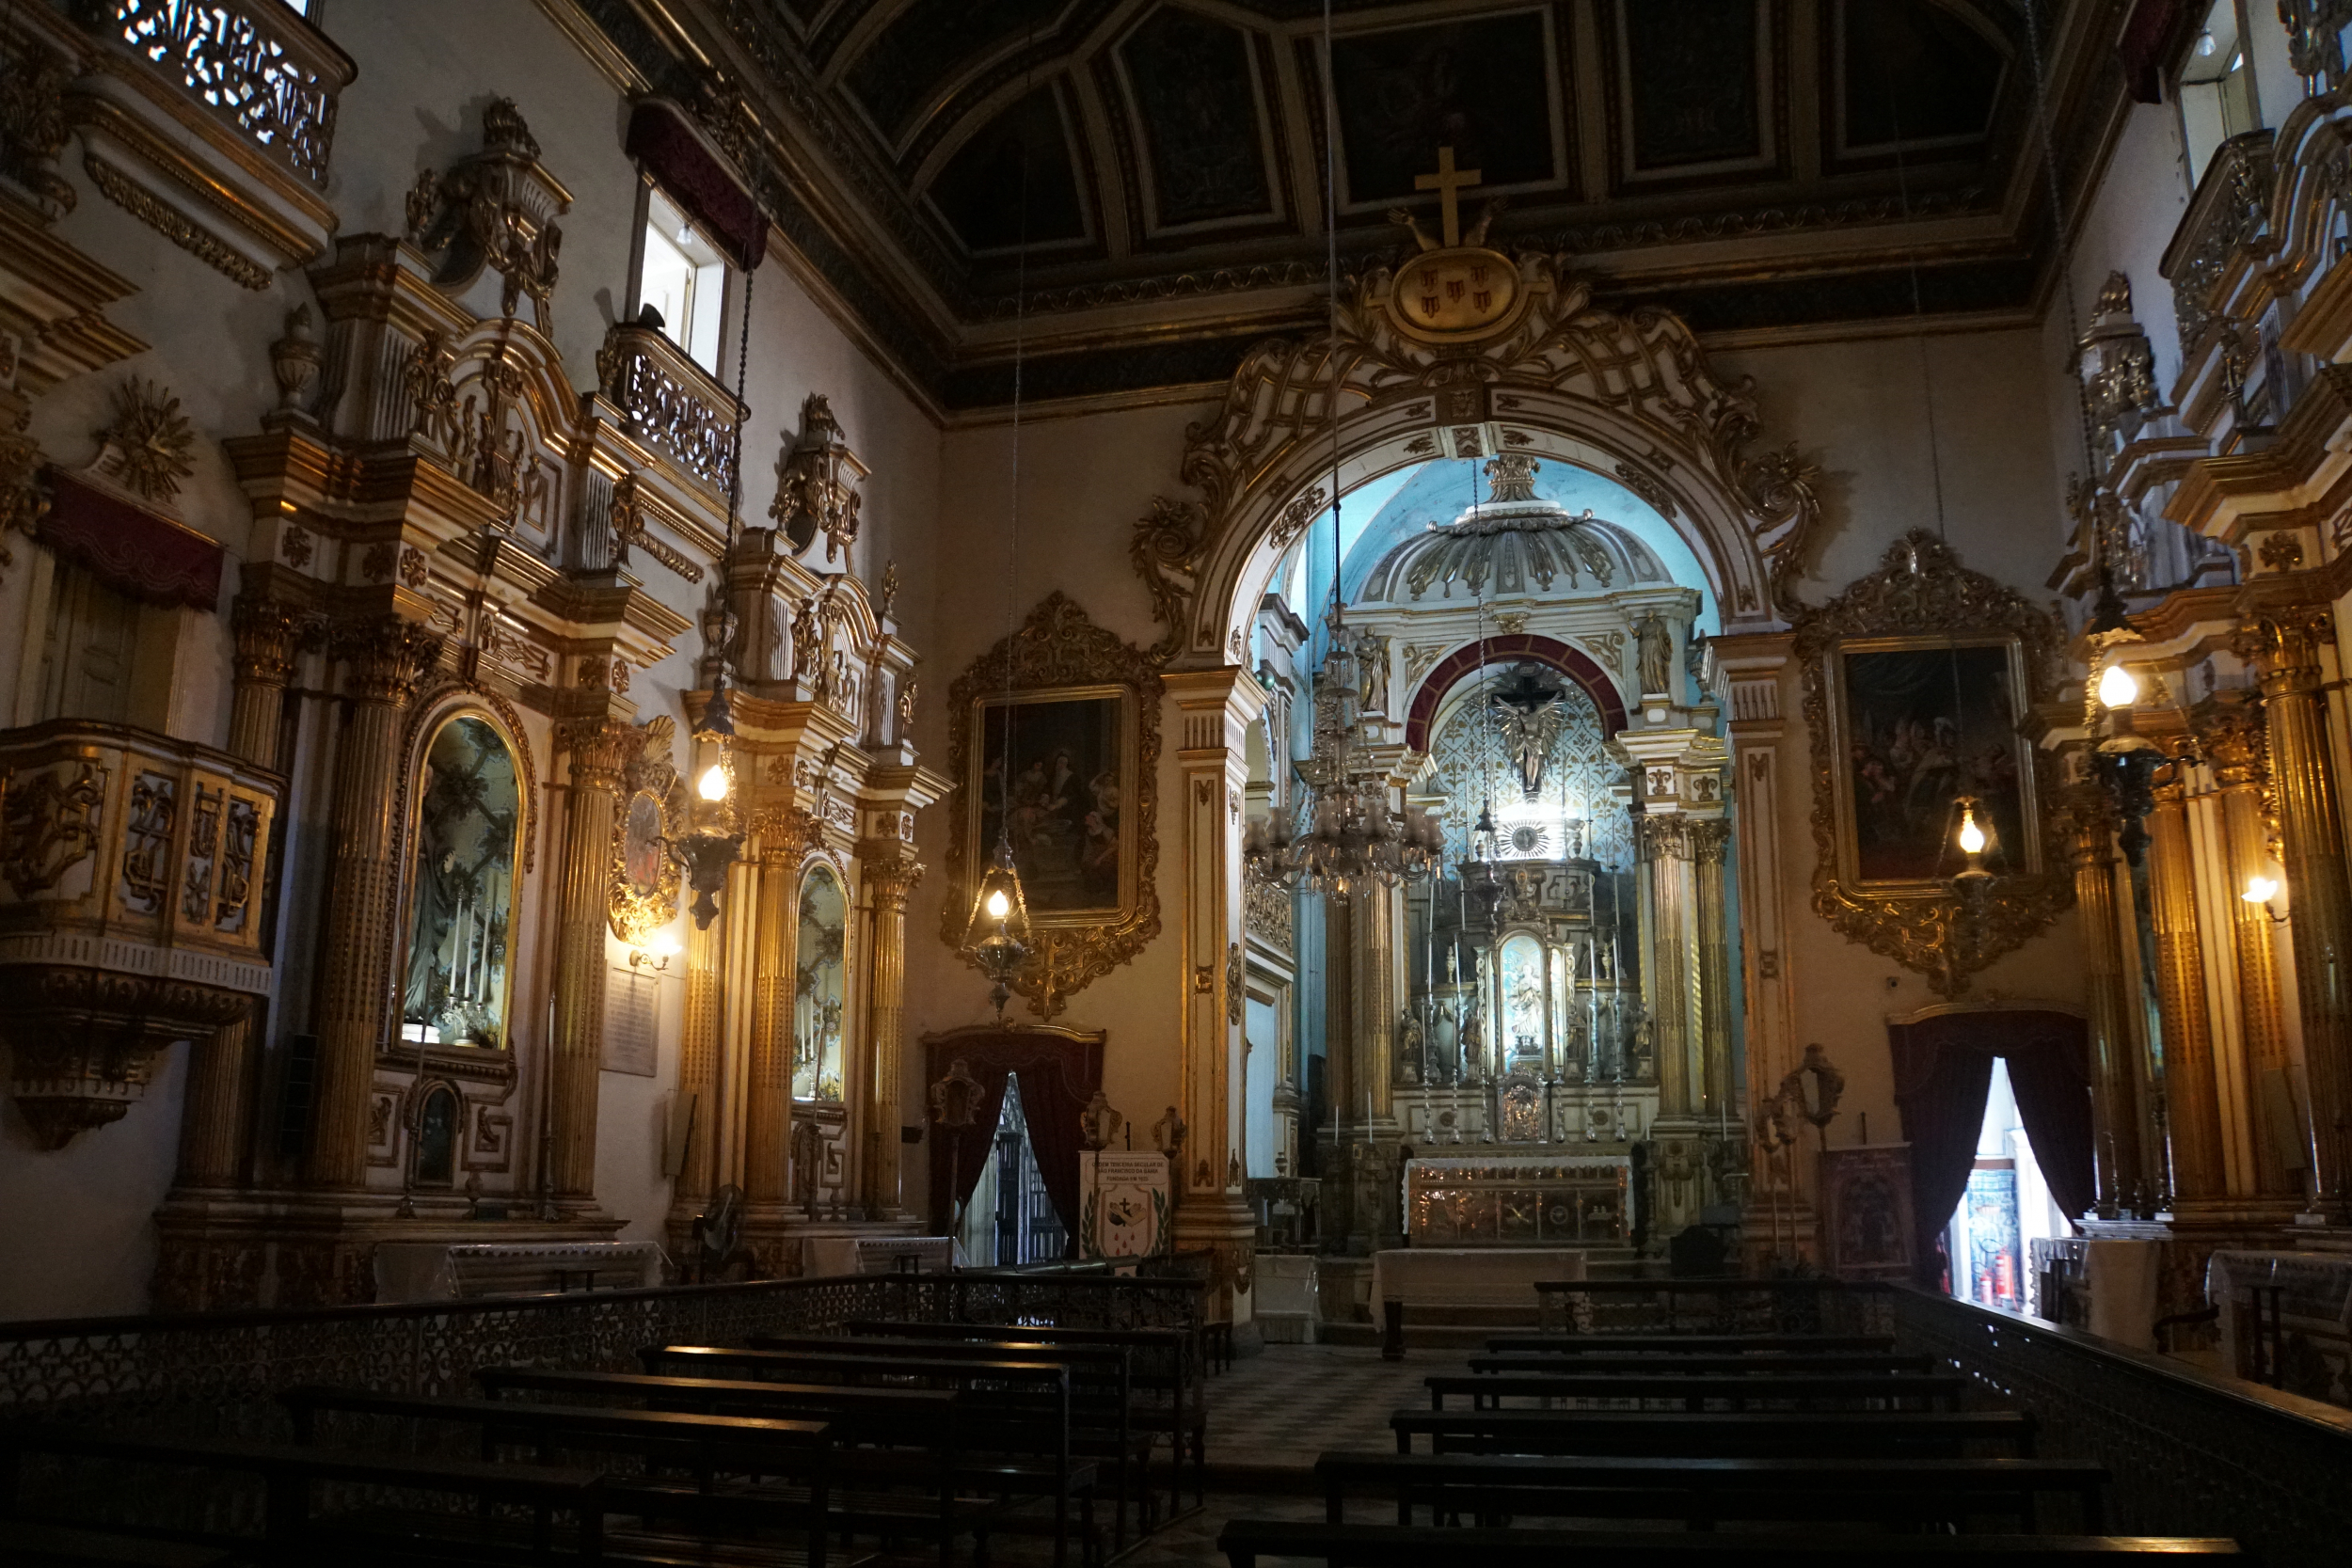 26. Ornate interior of church